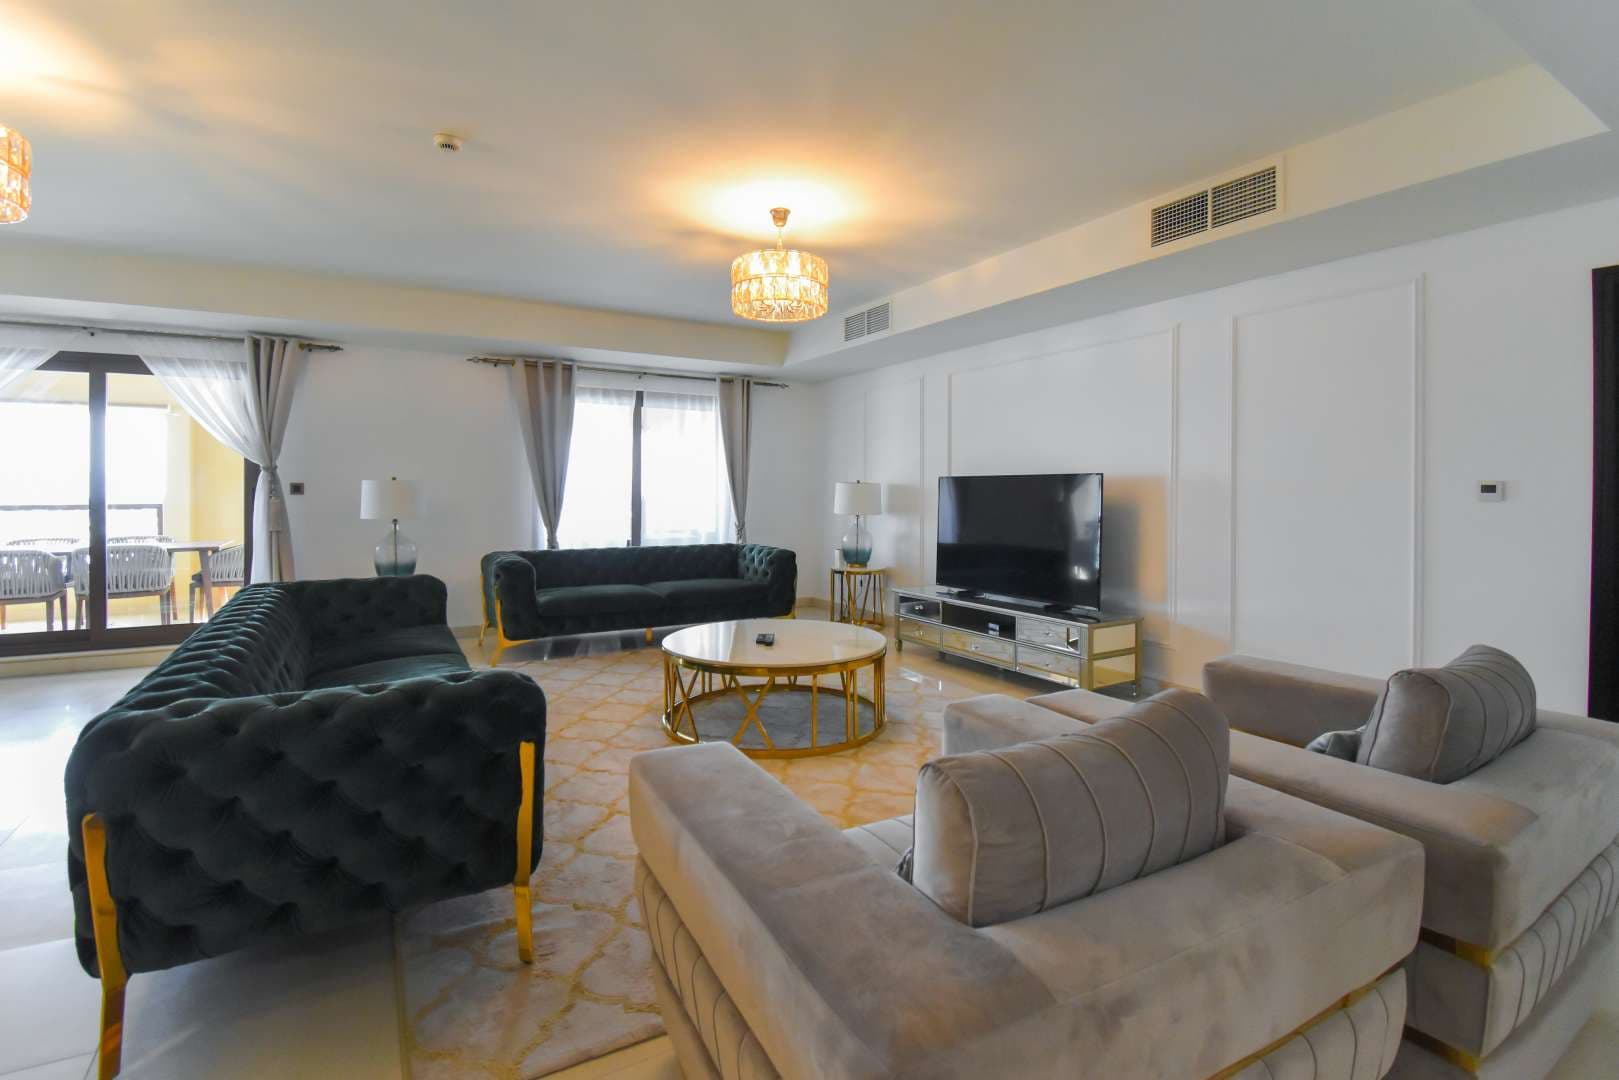 4 Bedroom Apartment For Sale Kingdom Of Sheba Lp10846 1d40544c70ea0c00.jpg